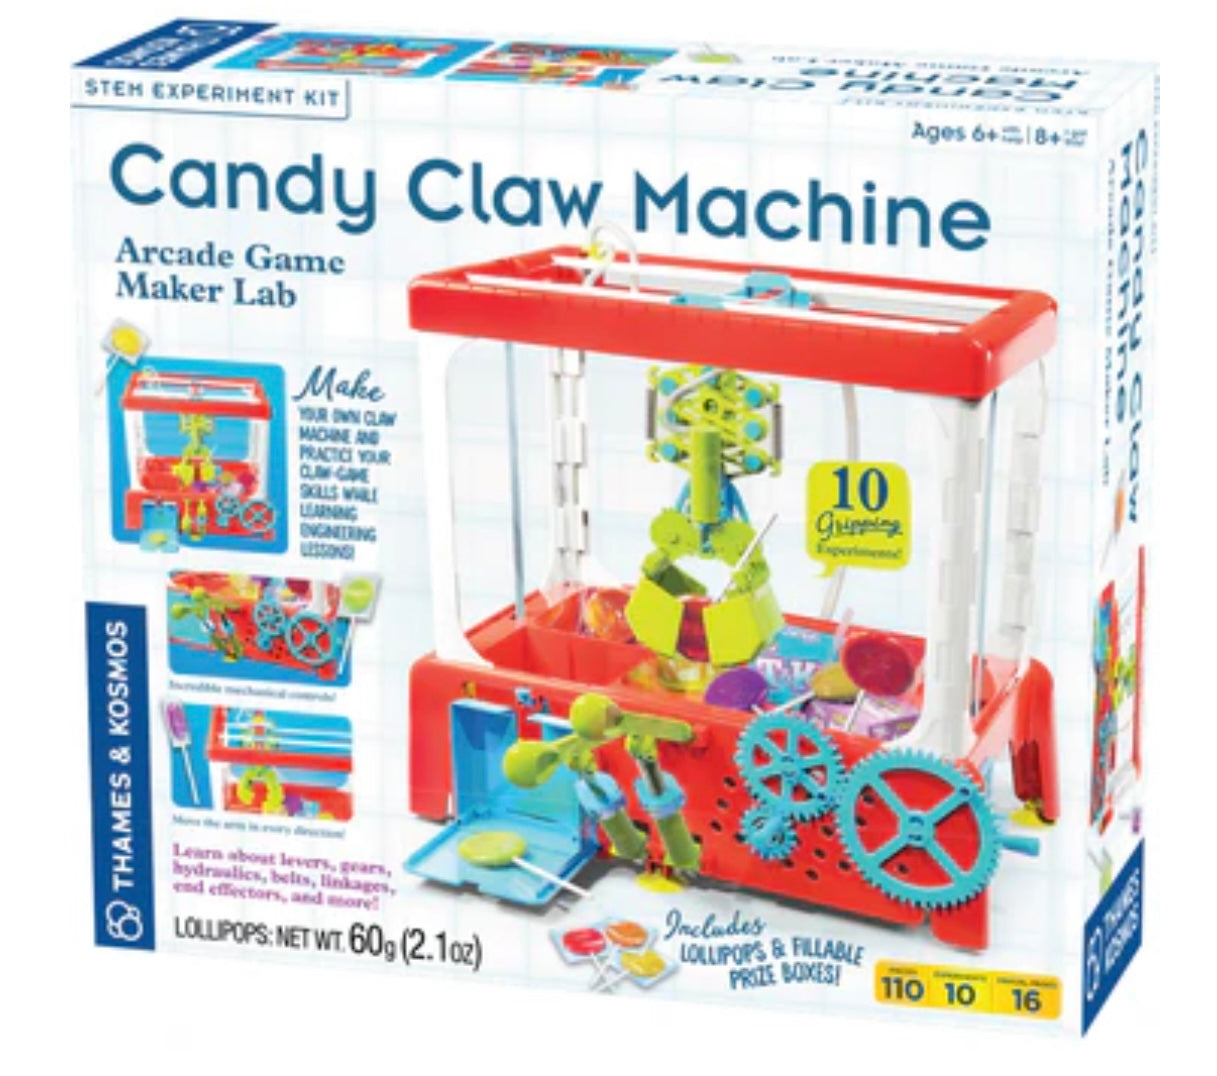 CANDY CLAW MACHINE ARCADE GAME